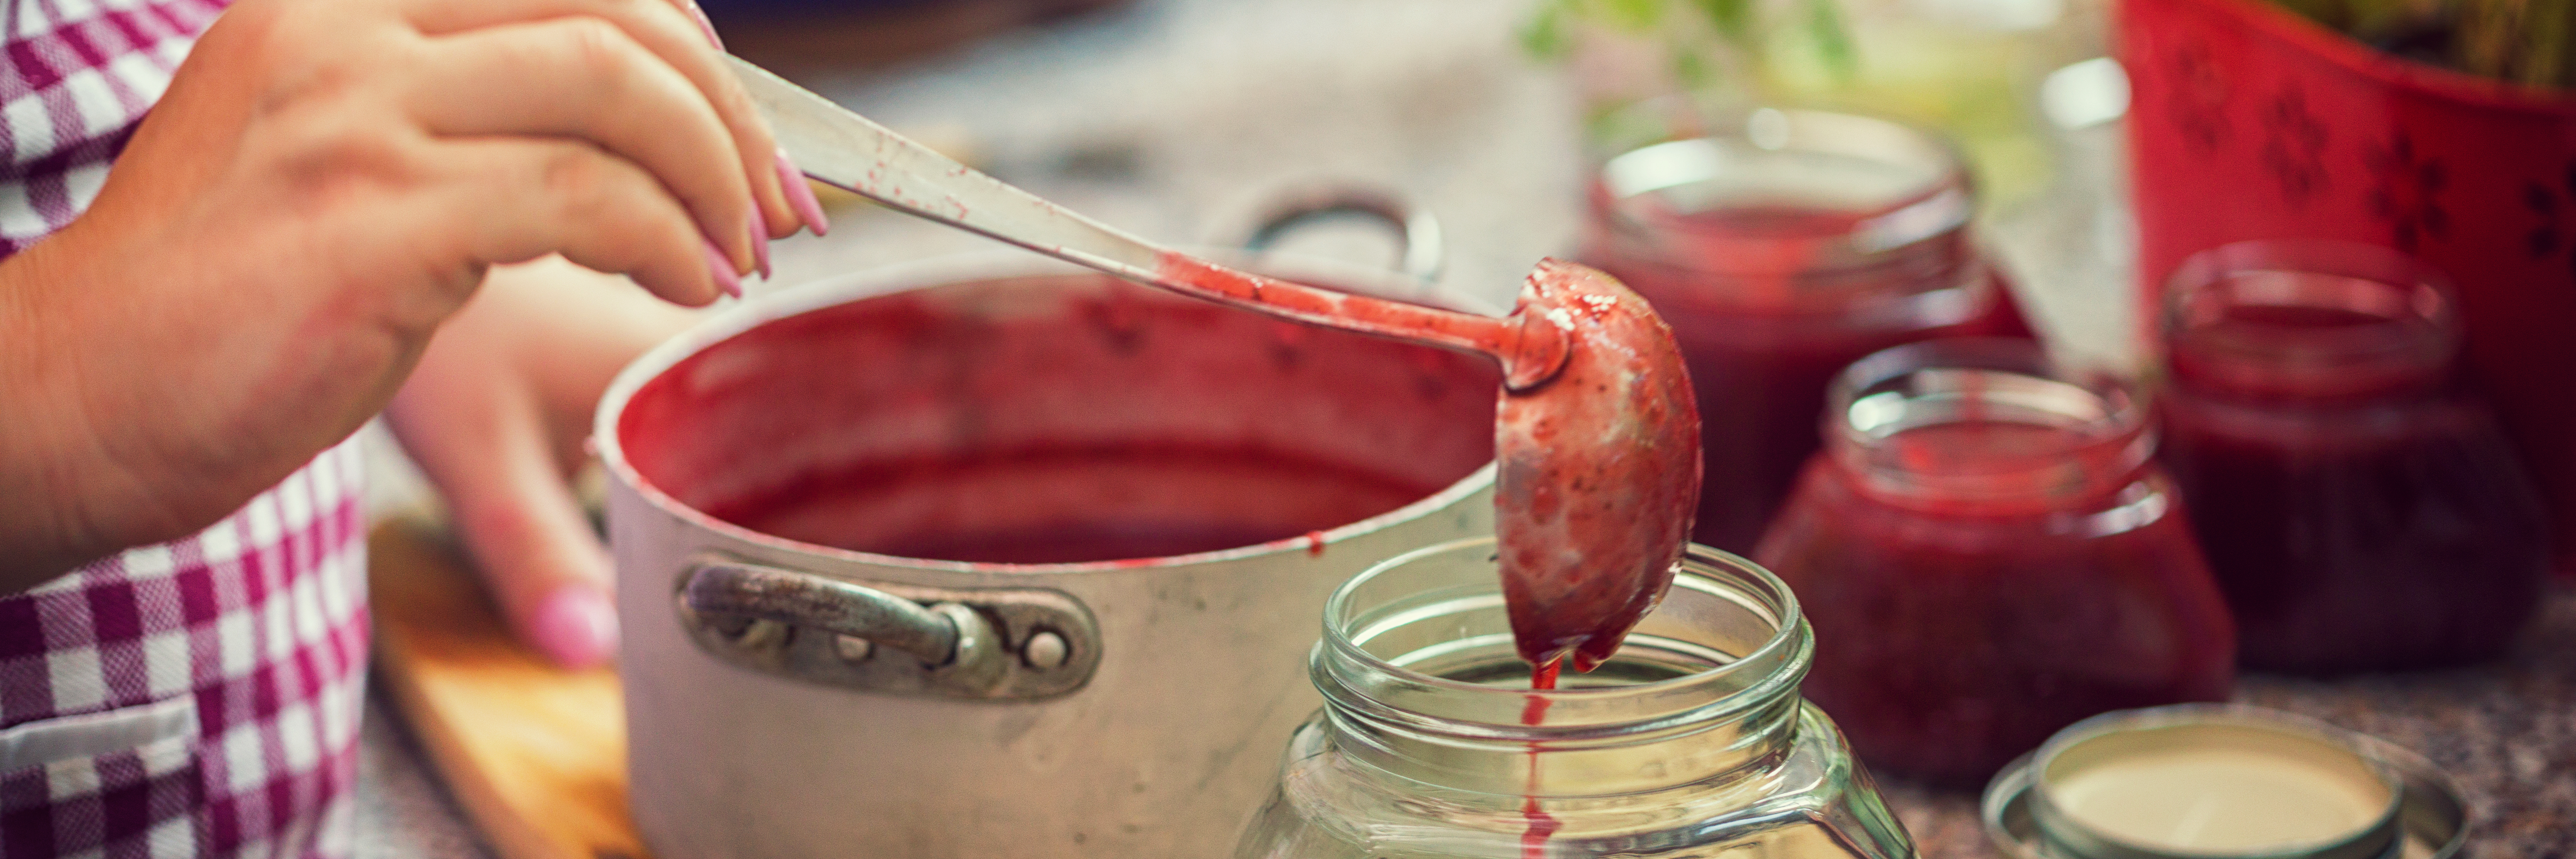 Frau füllt rote Marmelade in ein Marmeladenglas